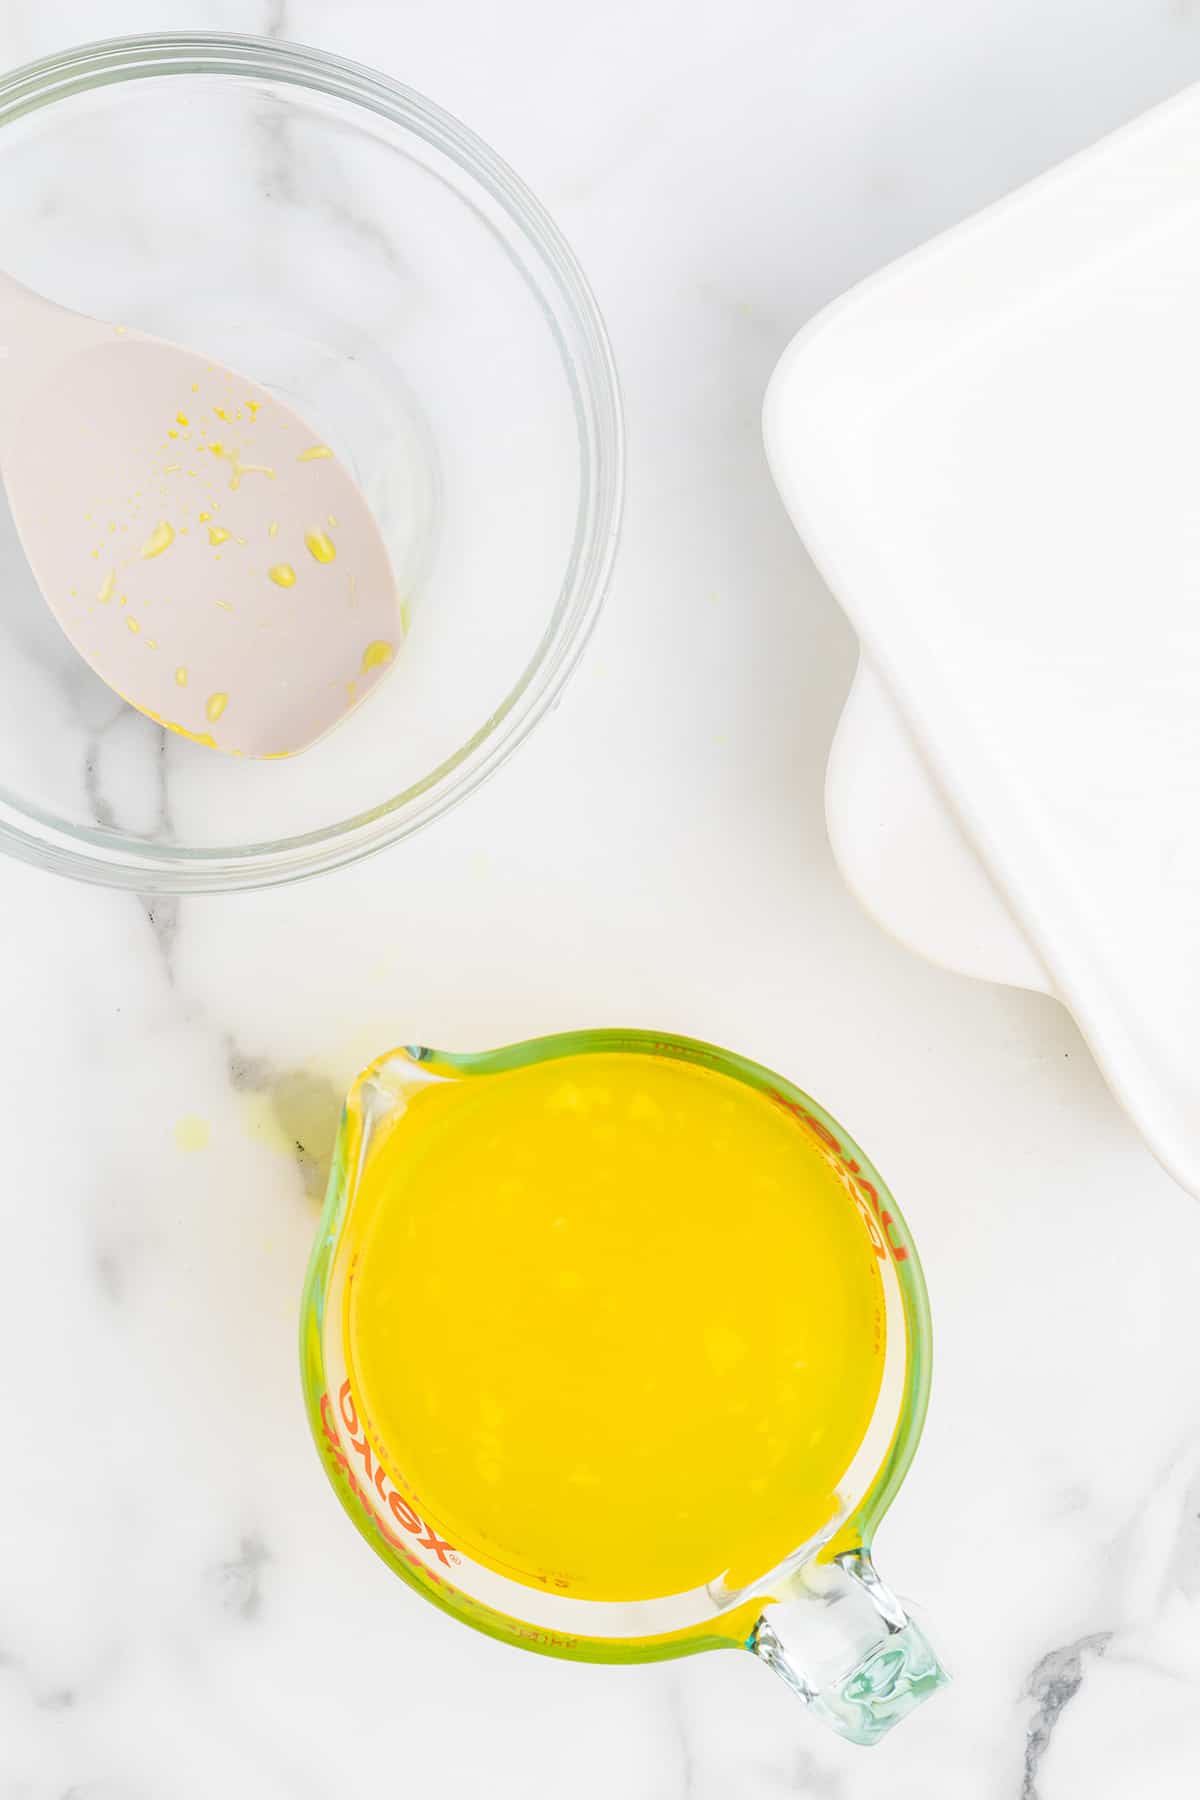 Pineapple juice added to dissolved jello.